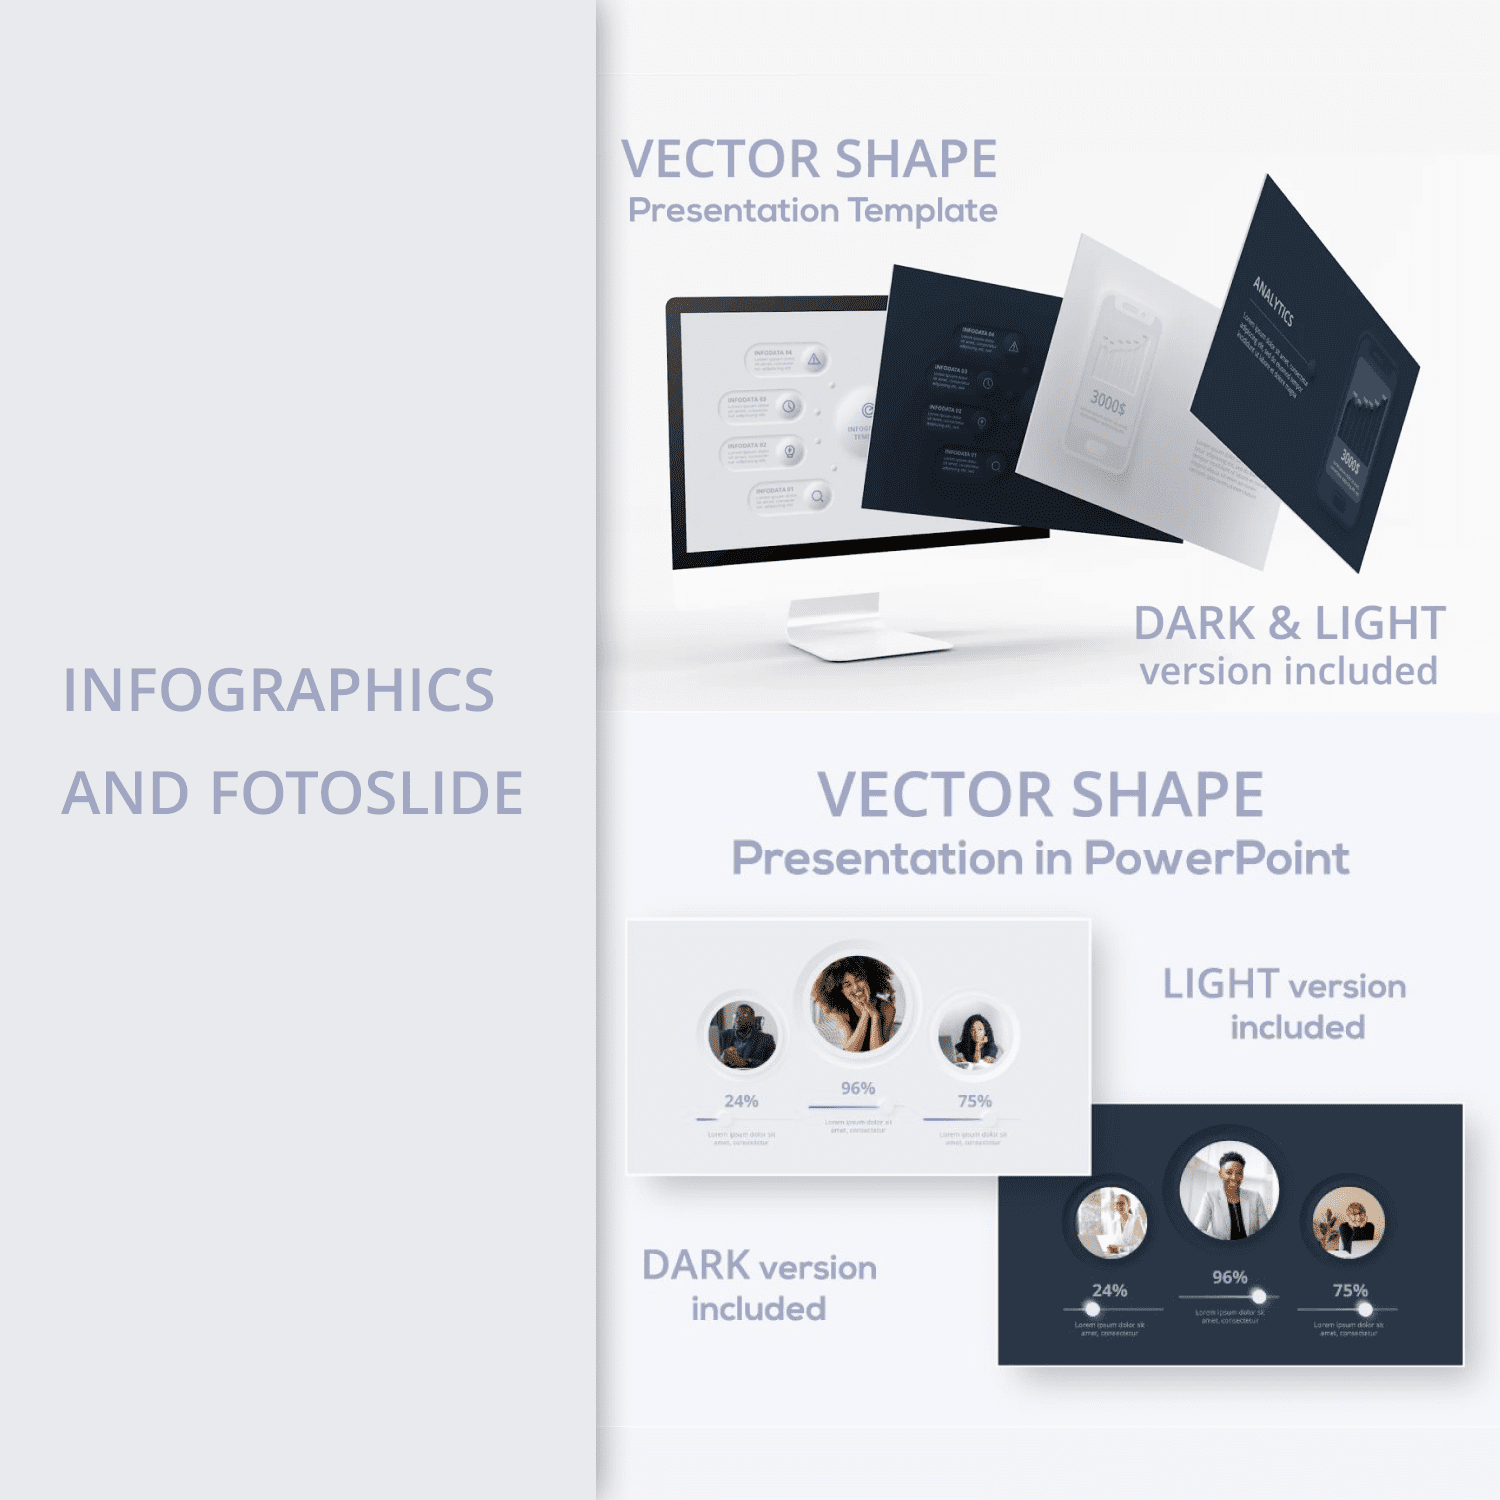 Neumorphic - Infographics And Fotoslide - Vector Shape Presentation Template.